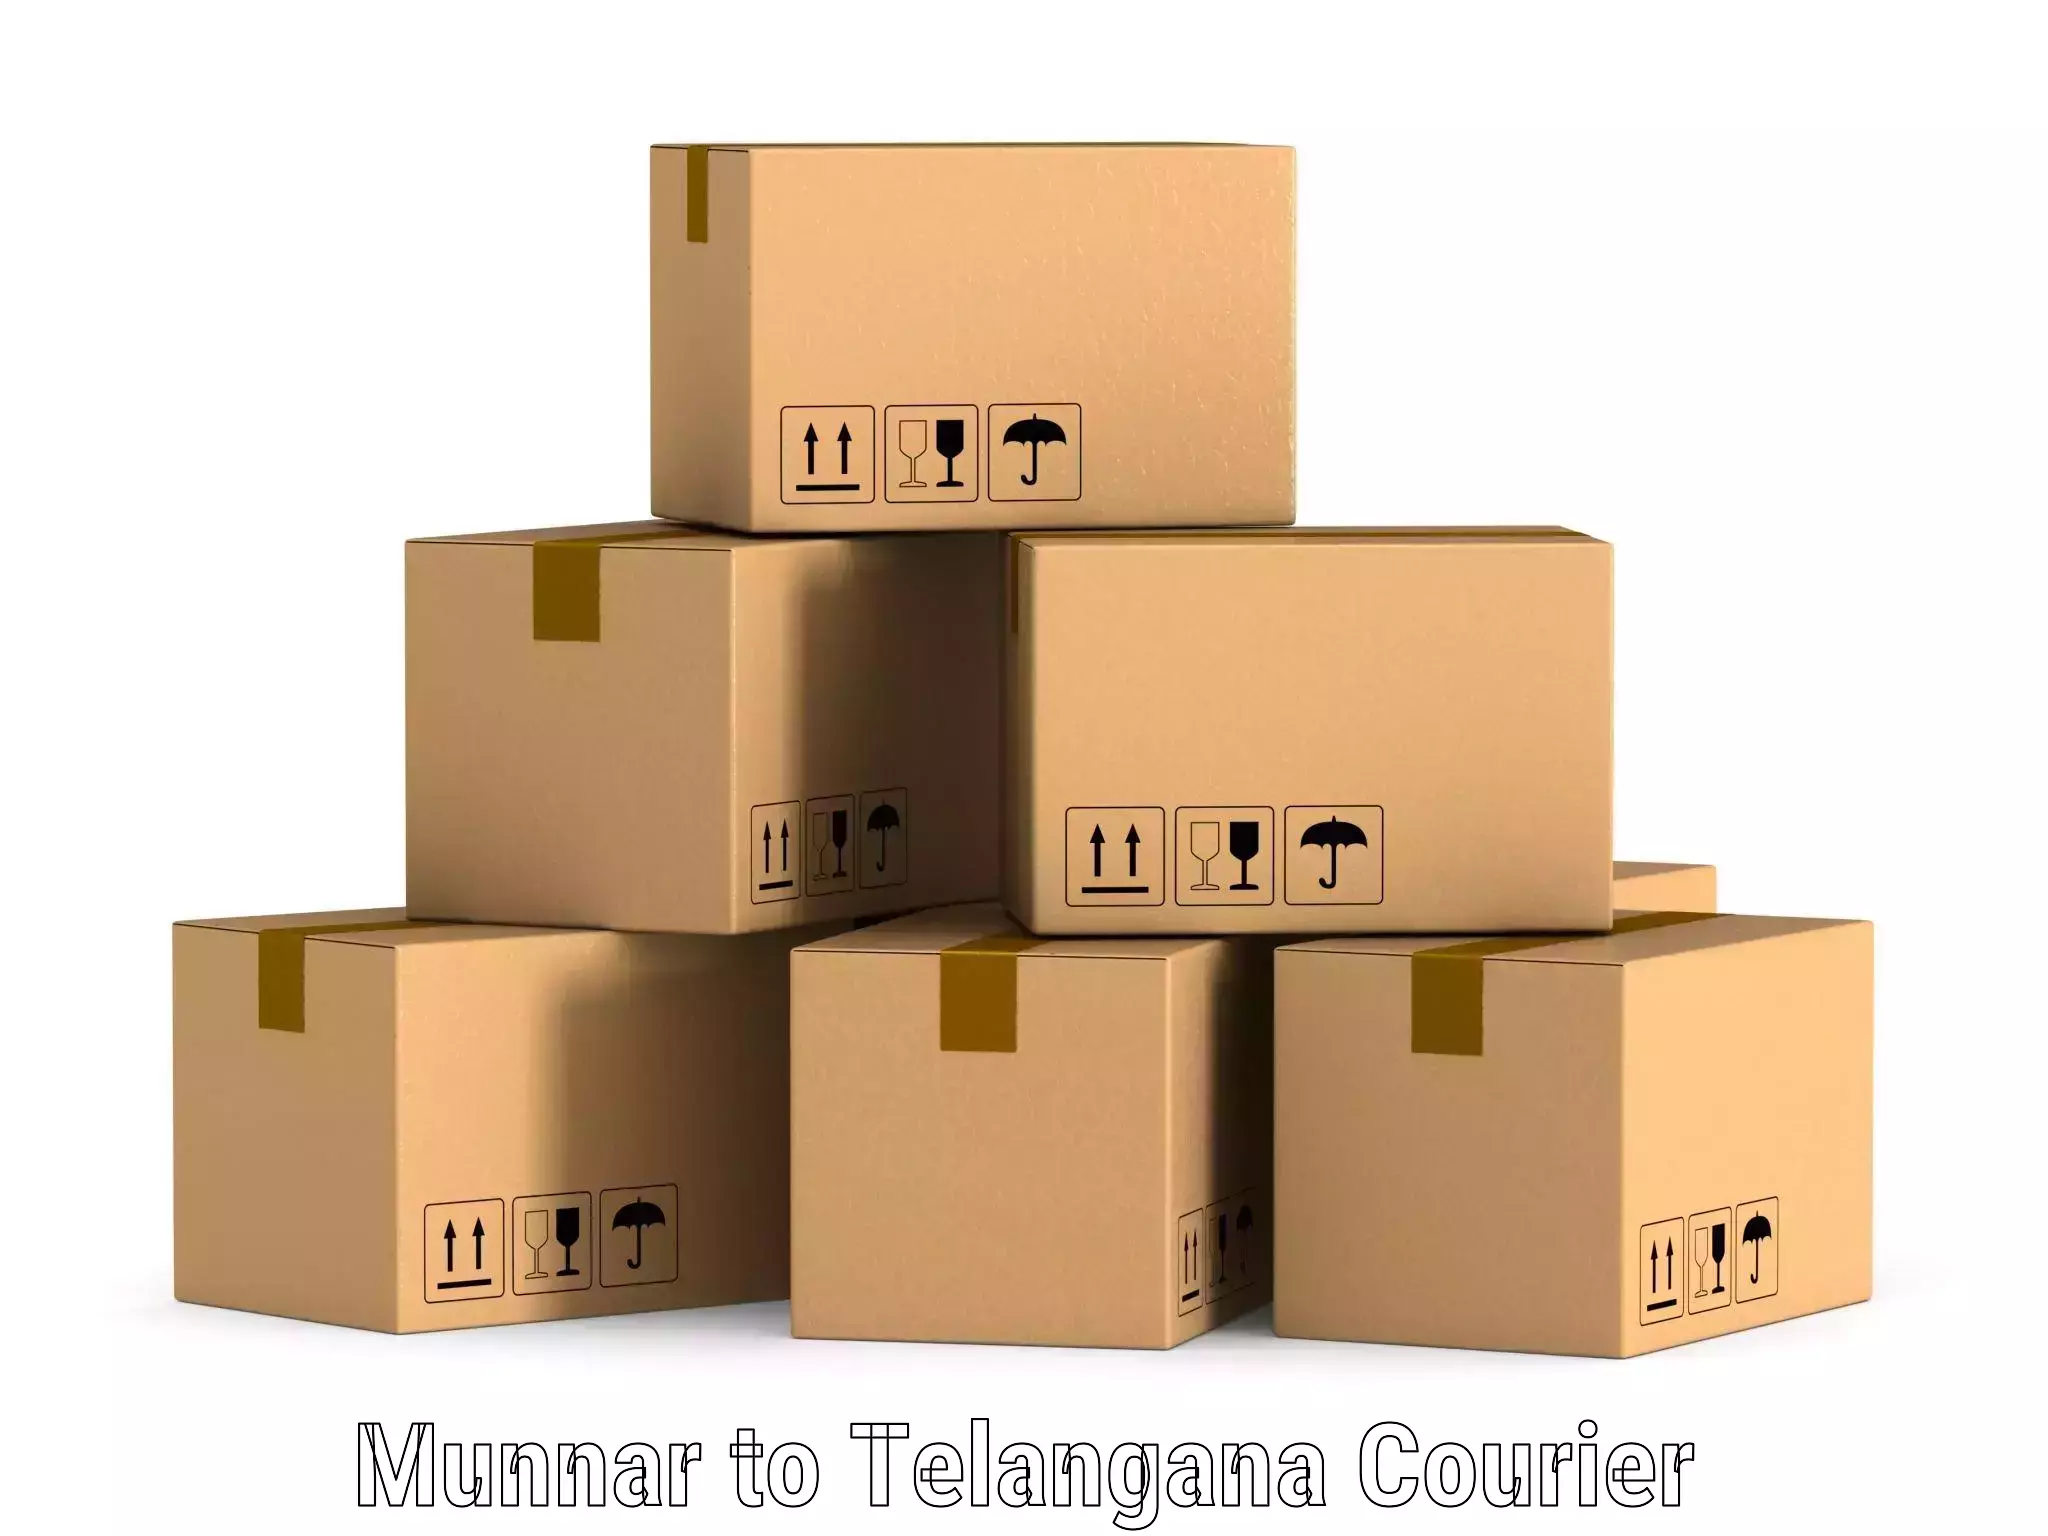 Local delivery service in Munnar to Manneguda